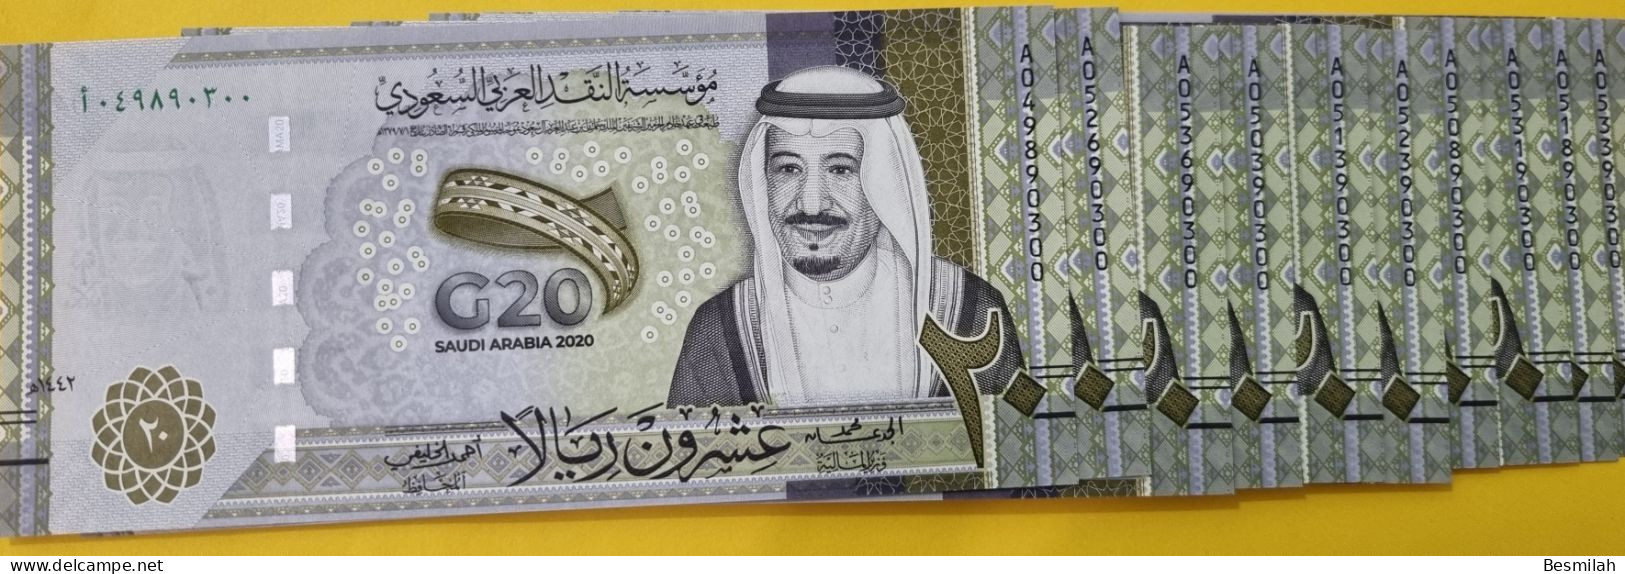 Saudi Arabia 20 Riyals 2020 P-New 10 Notes UNC Condition All Are The Serial Number 300 Rare - Saudi Arabia